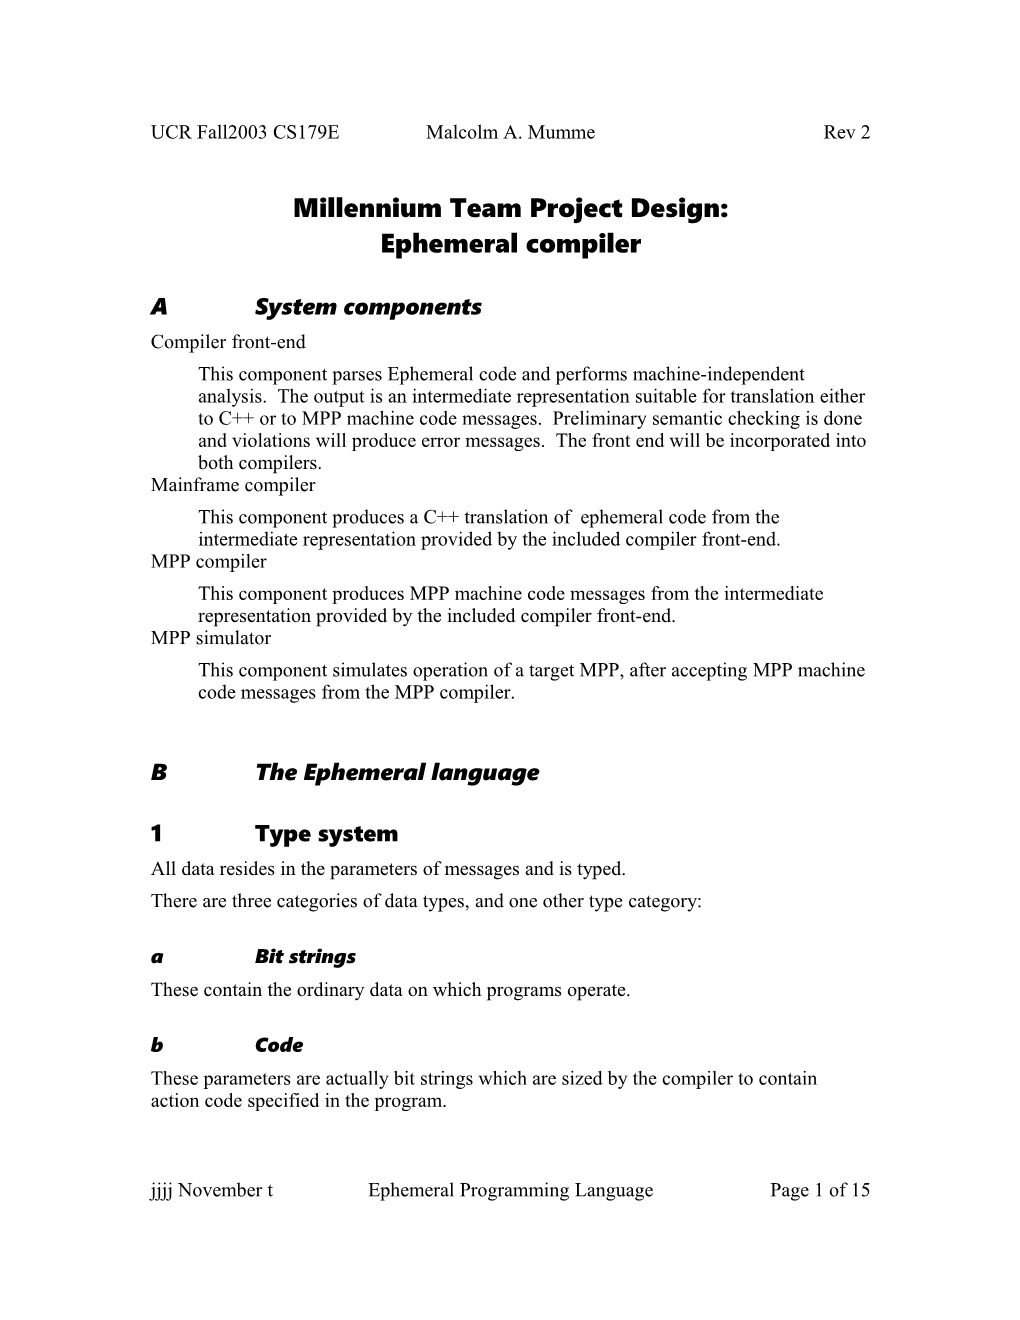 Millennium Team Project Design:Ephemeral Compiler